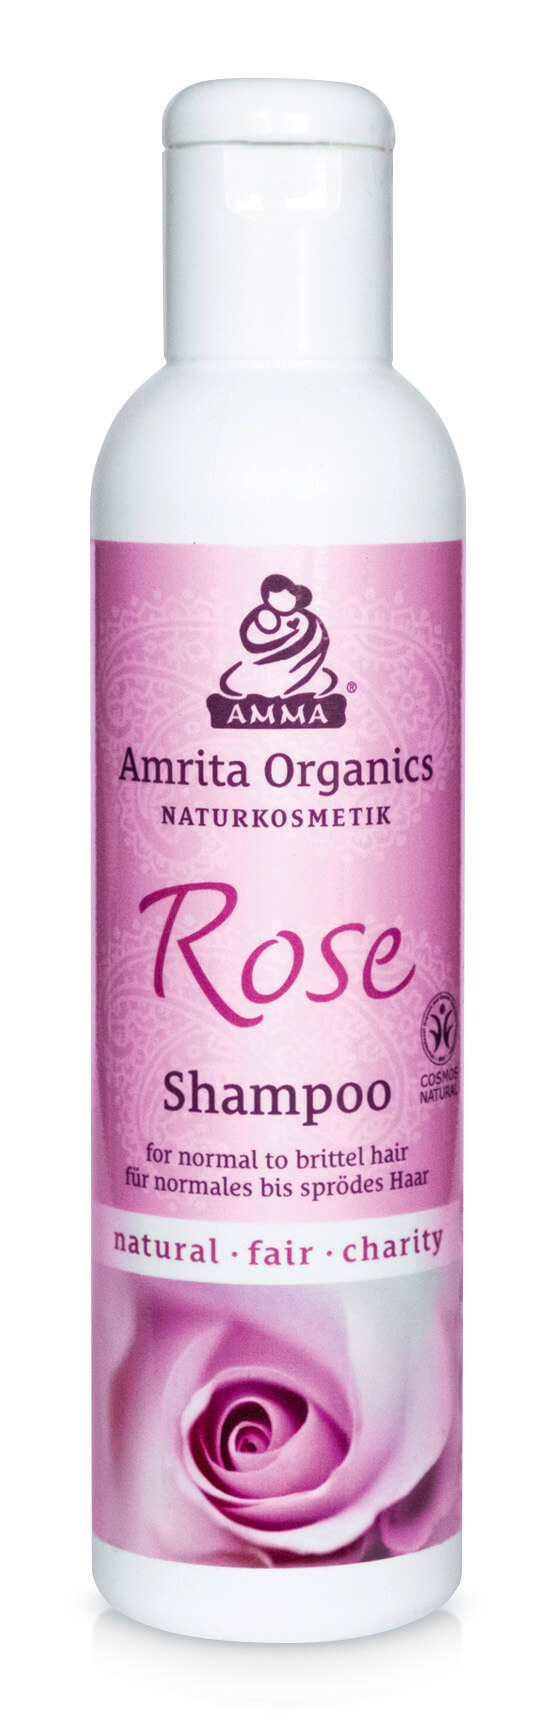 Shampoo Rose, organic